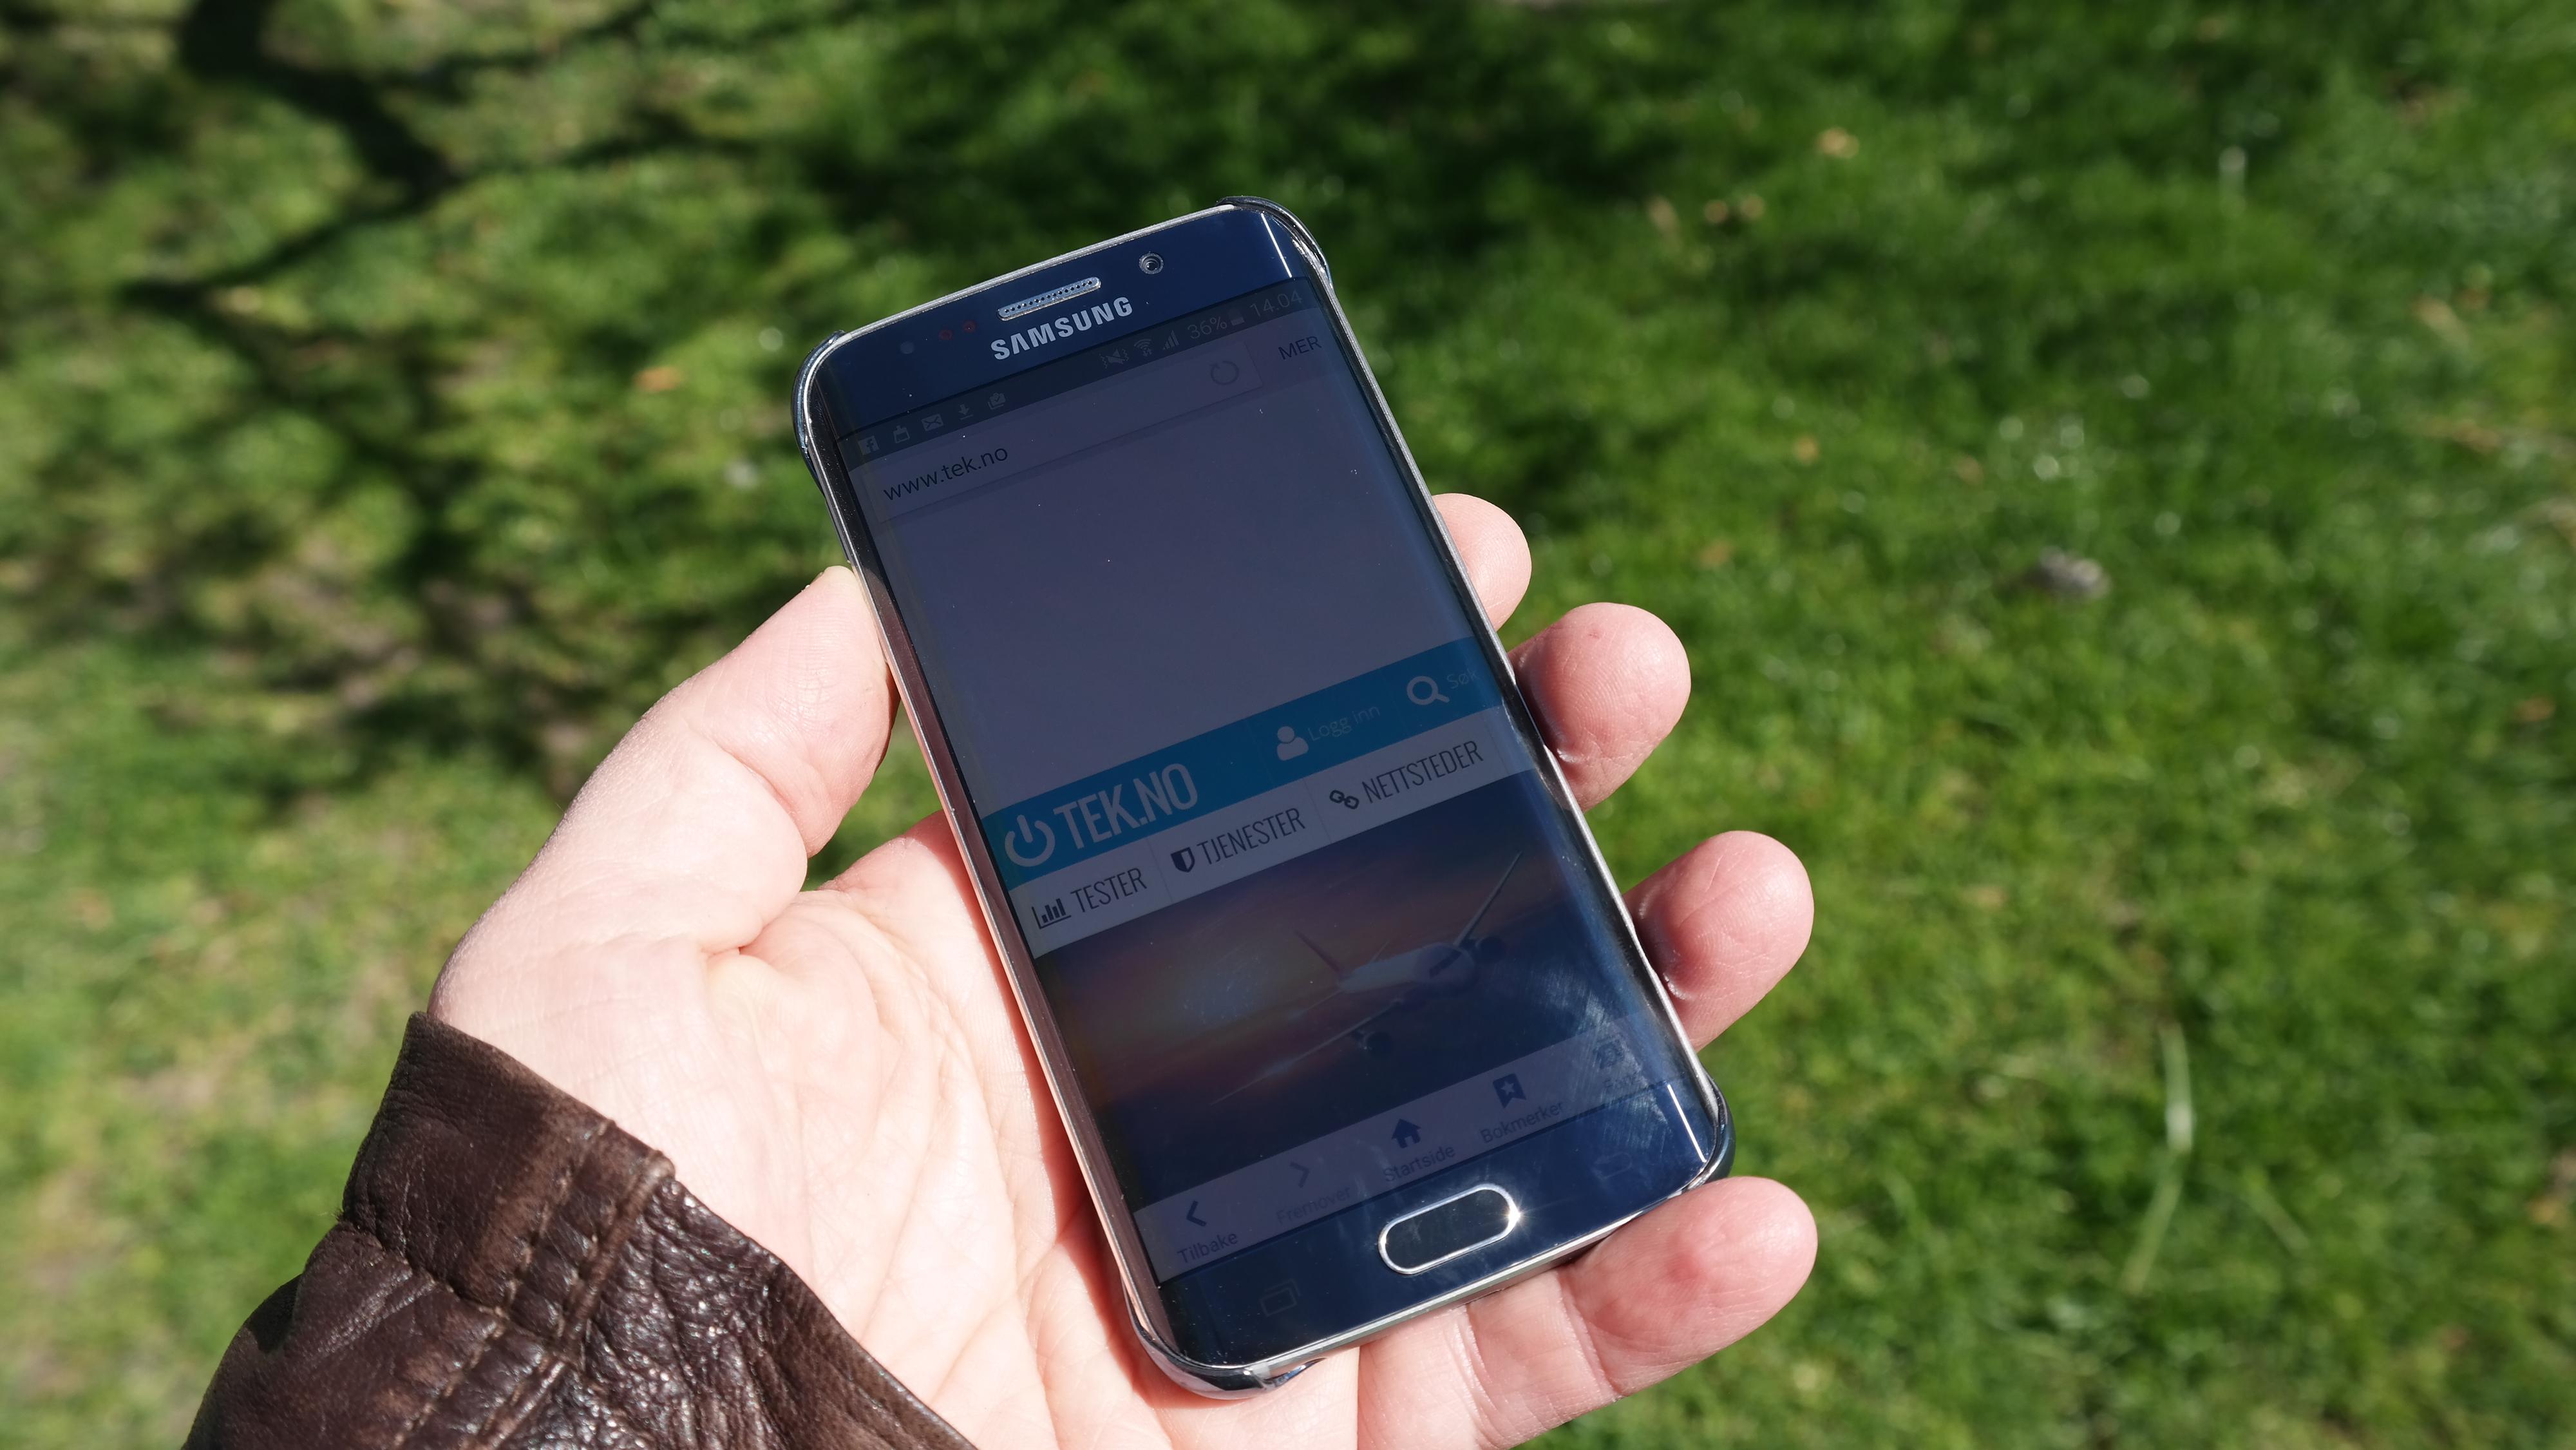 Samsung Galaxy S6 Edge. Foto: Espen Irwing Swang, Tek.no